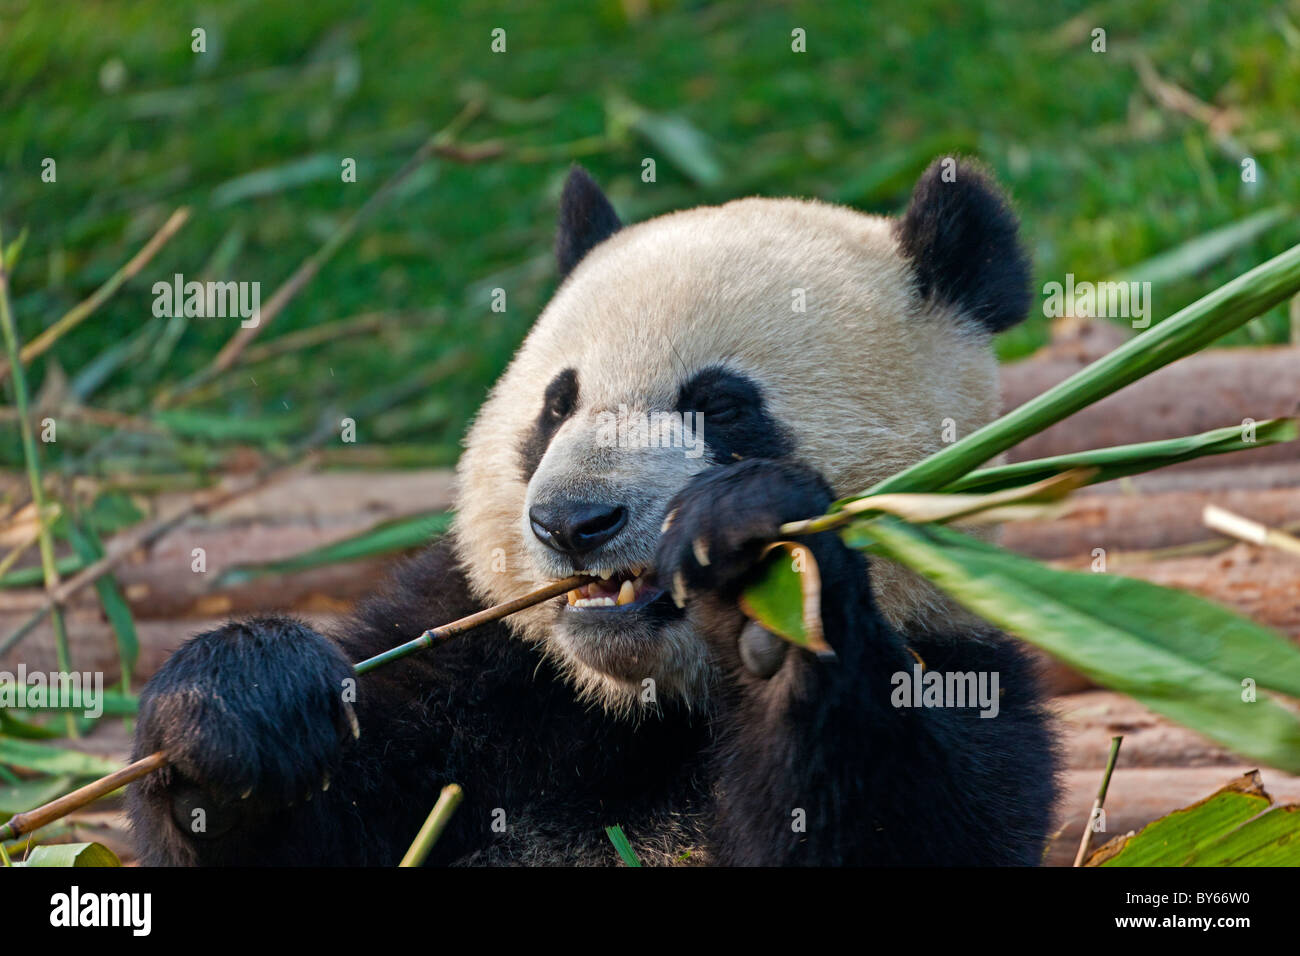 Giant Panda feeding on bamboo at Chengdu Research Base of Giant Panda Breeding, China. JMH4388 Stock Photo